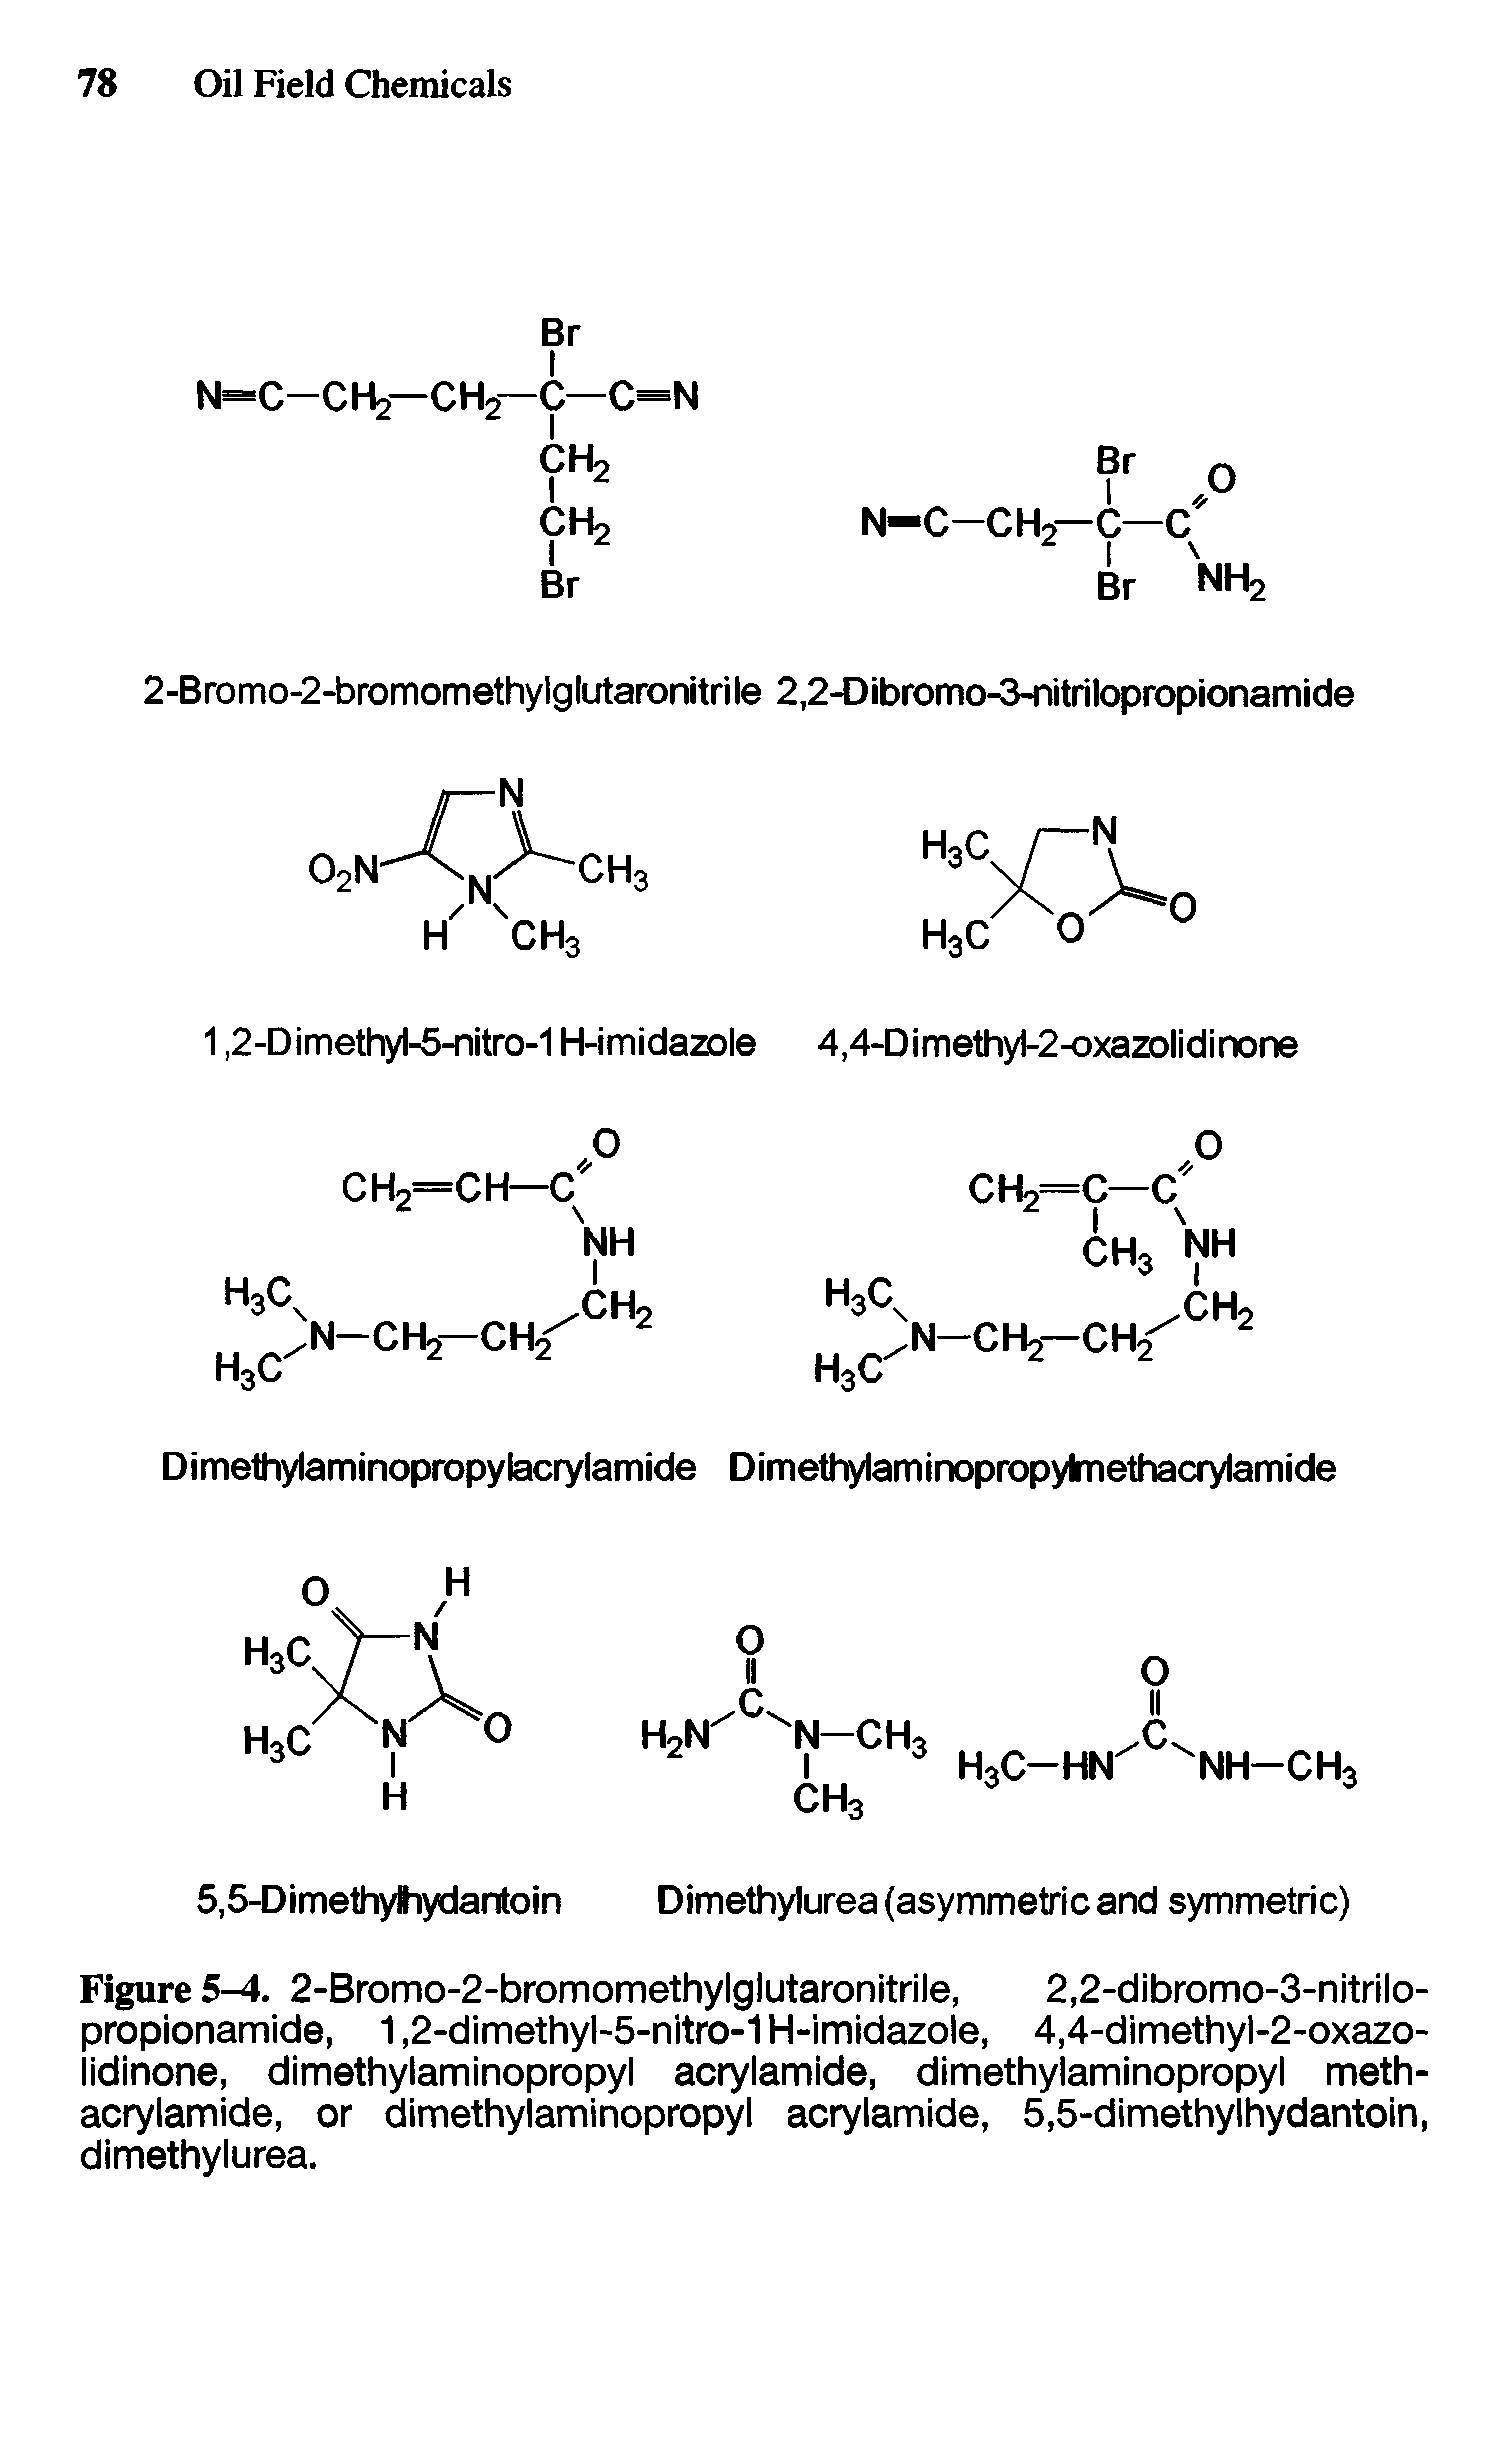 Figure 5-4. 2-Bromo-2-bromomethylglutaronitrile, 2,2-dibromo-3-nitrilo-propionamide, 1,2-dimethyl-5-nitro-1 H-imidazole, 4,4-dimethyl-2-oxazo-lidinone, dimethylaminopropyl acrylamide, dimethylaminopropyl methacrylamide, or dimethylaminopropyl acrylamide, 5,5-dimethylhydantoin, dimethylurea.